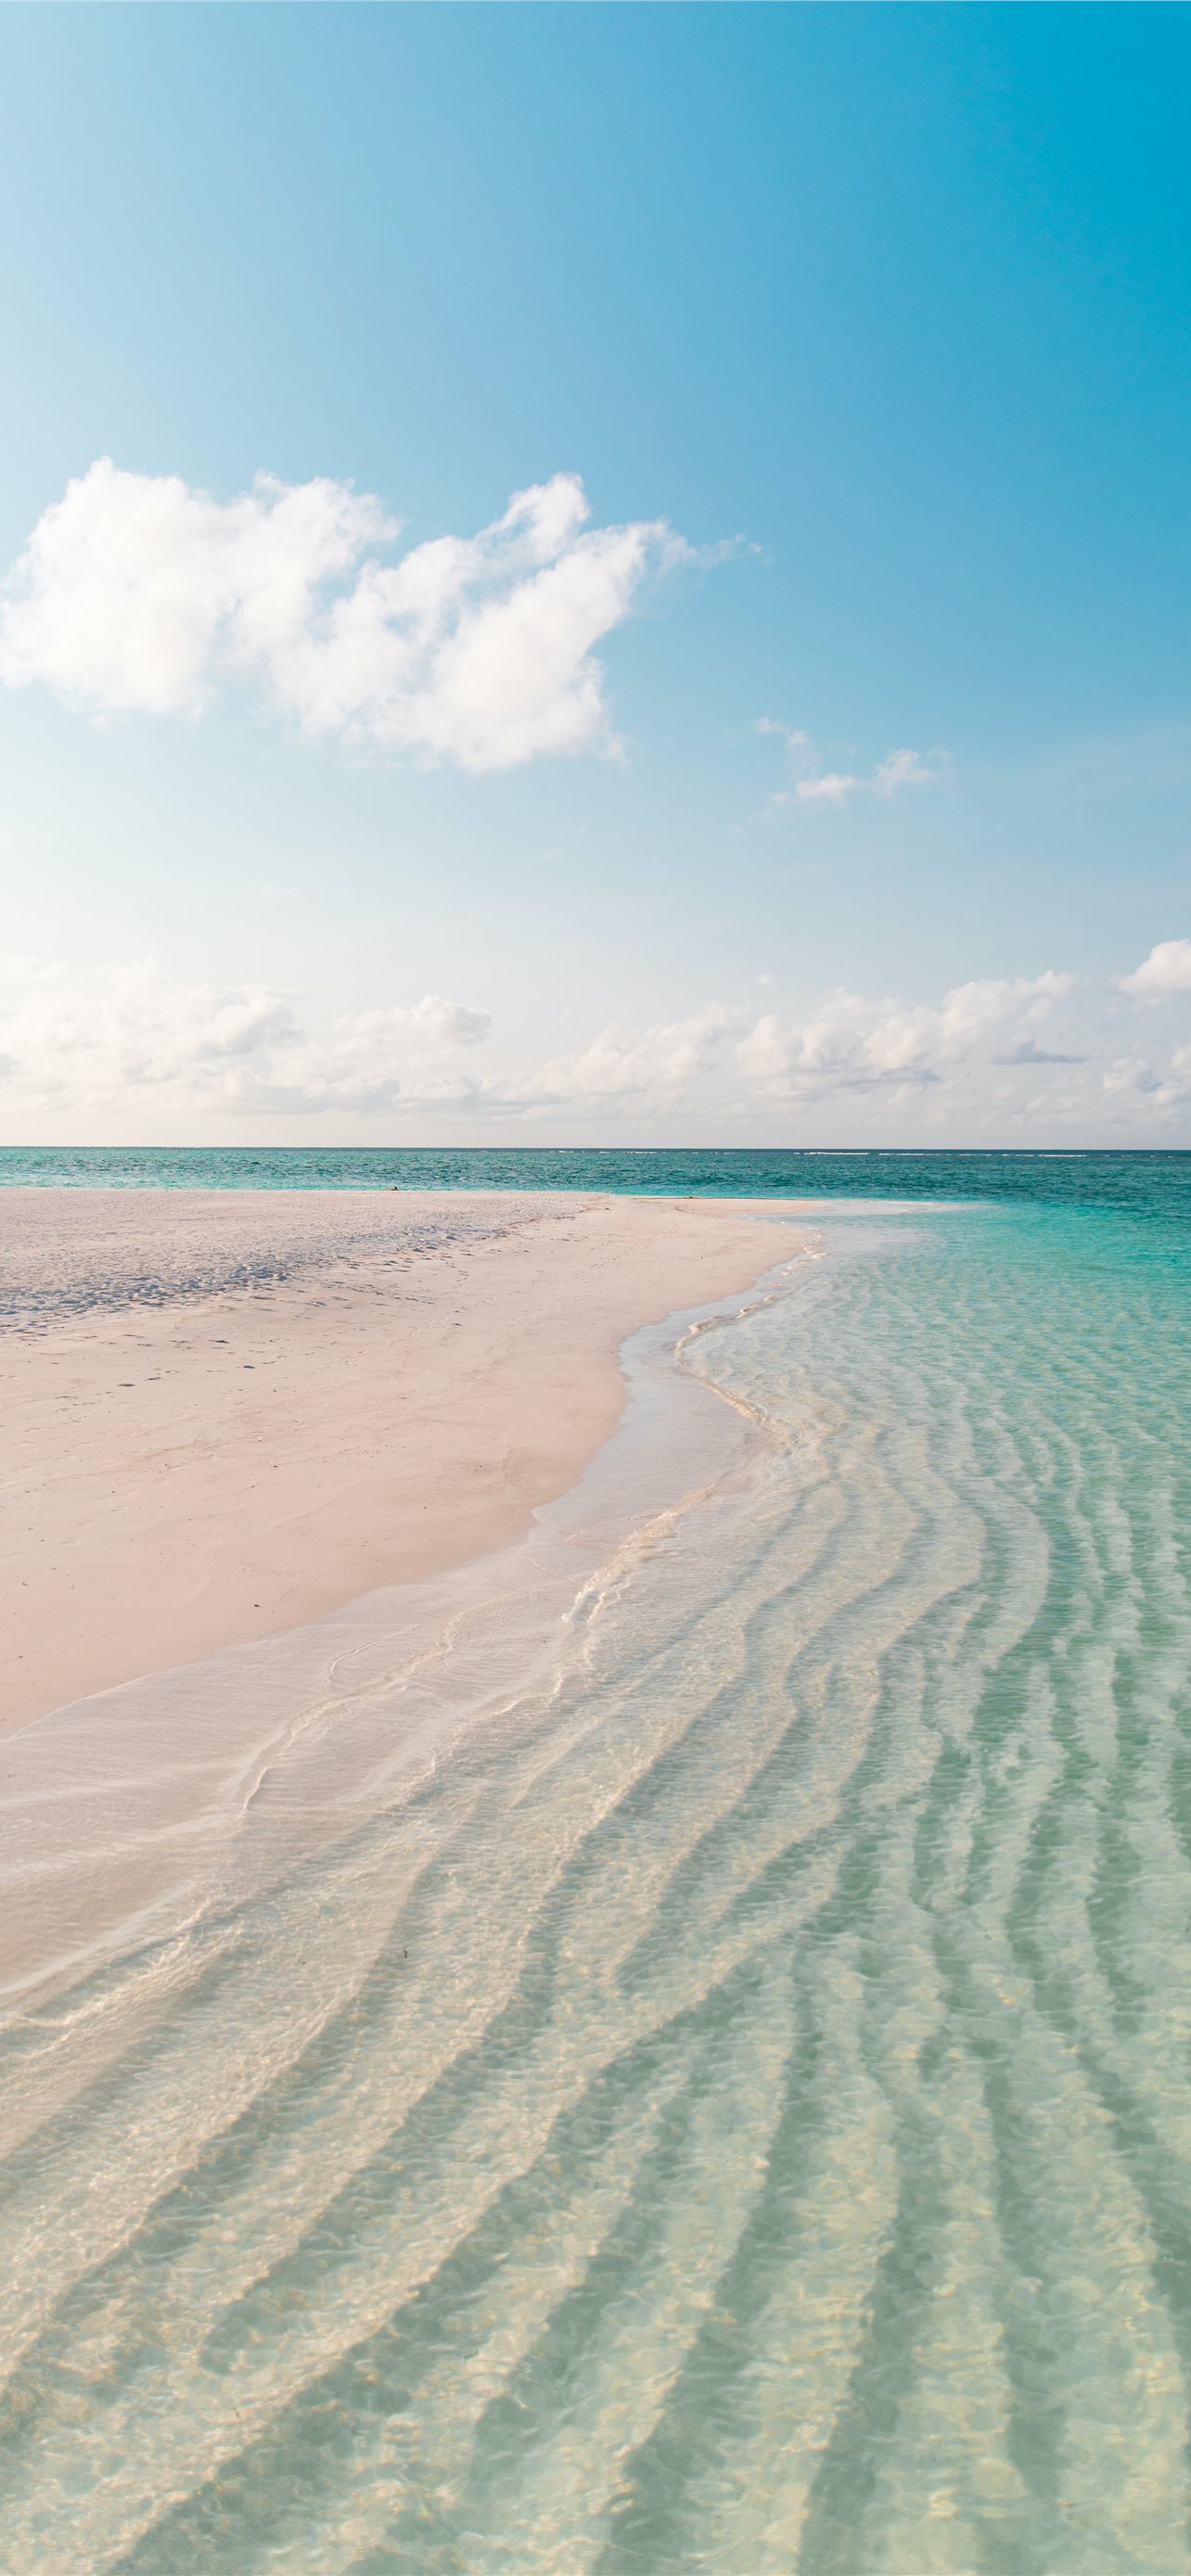 white sand beach during daytime iPhone wallpaper 